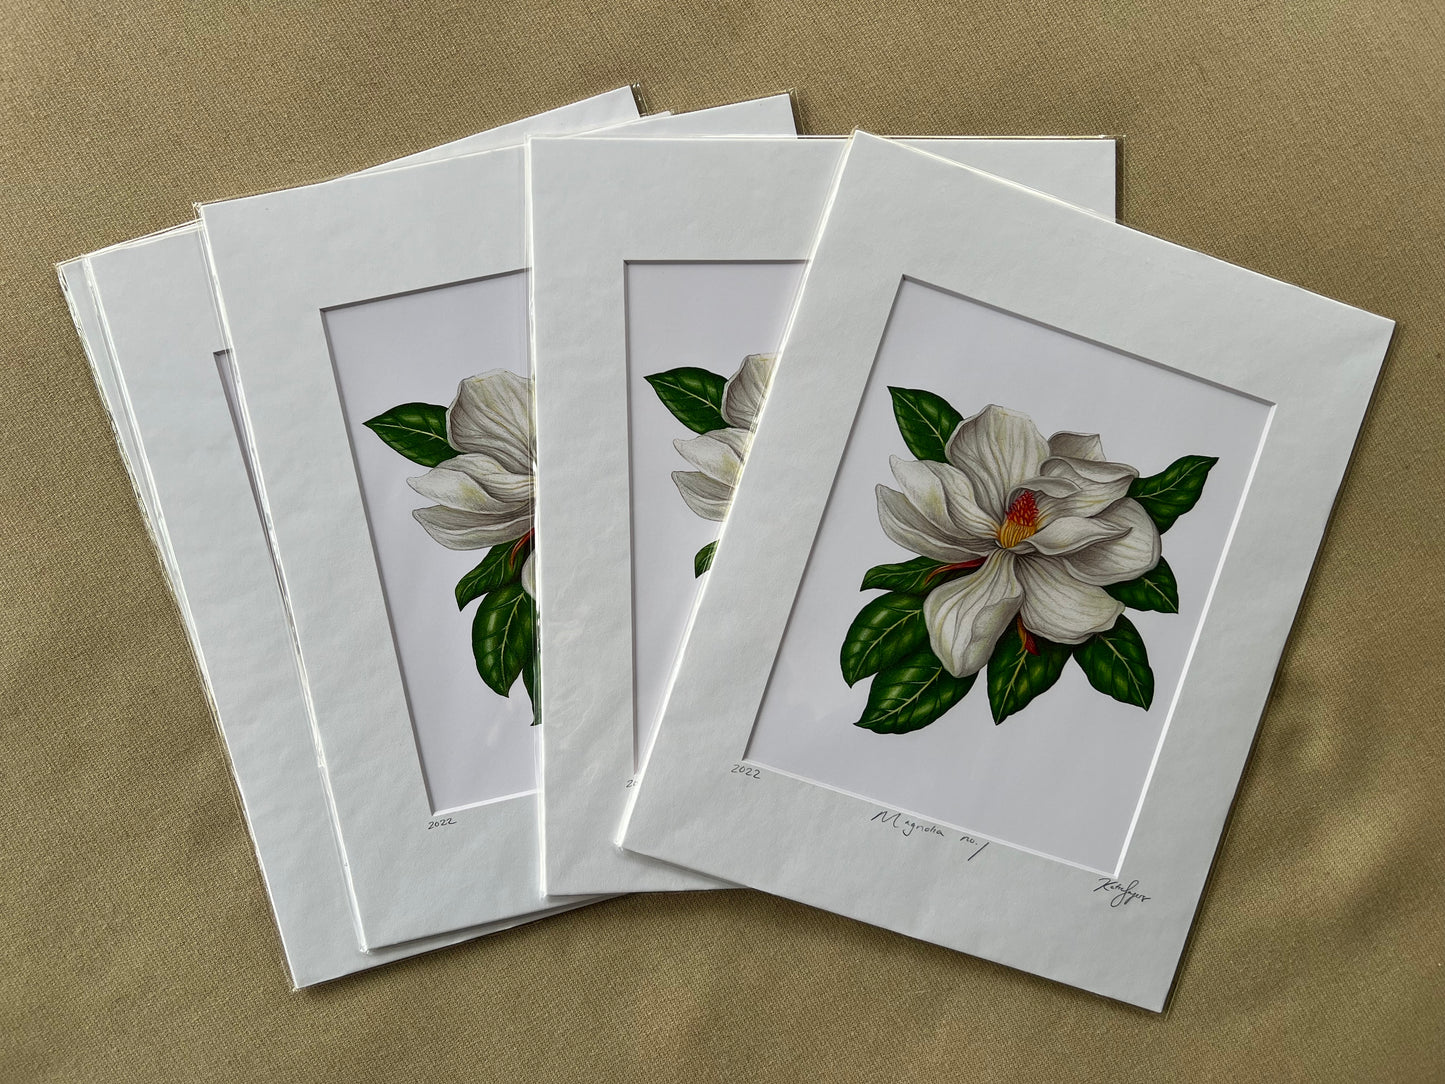 Magnolia no.1 Fine Art Botanical Illustration Print